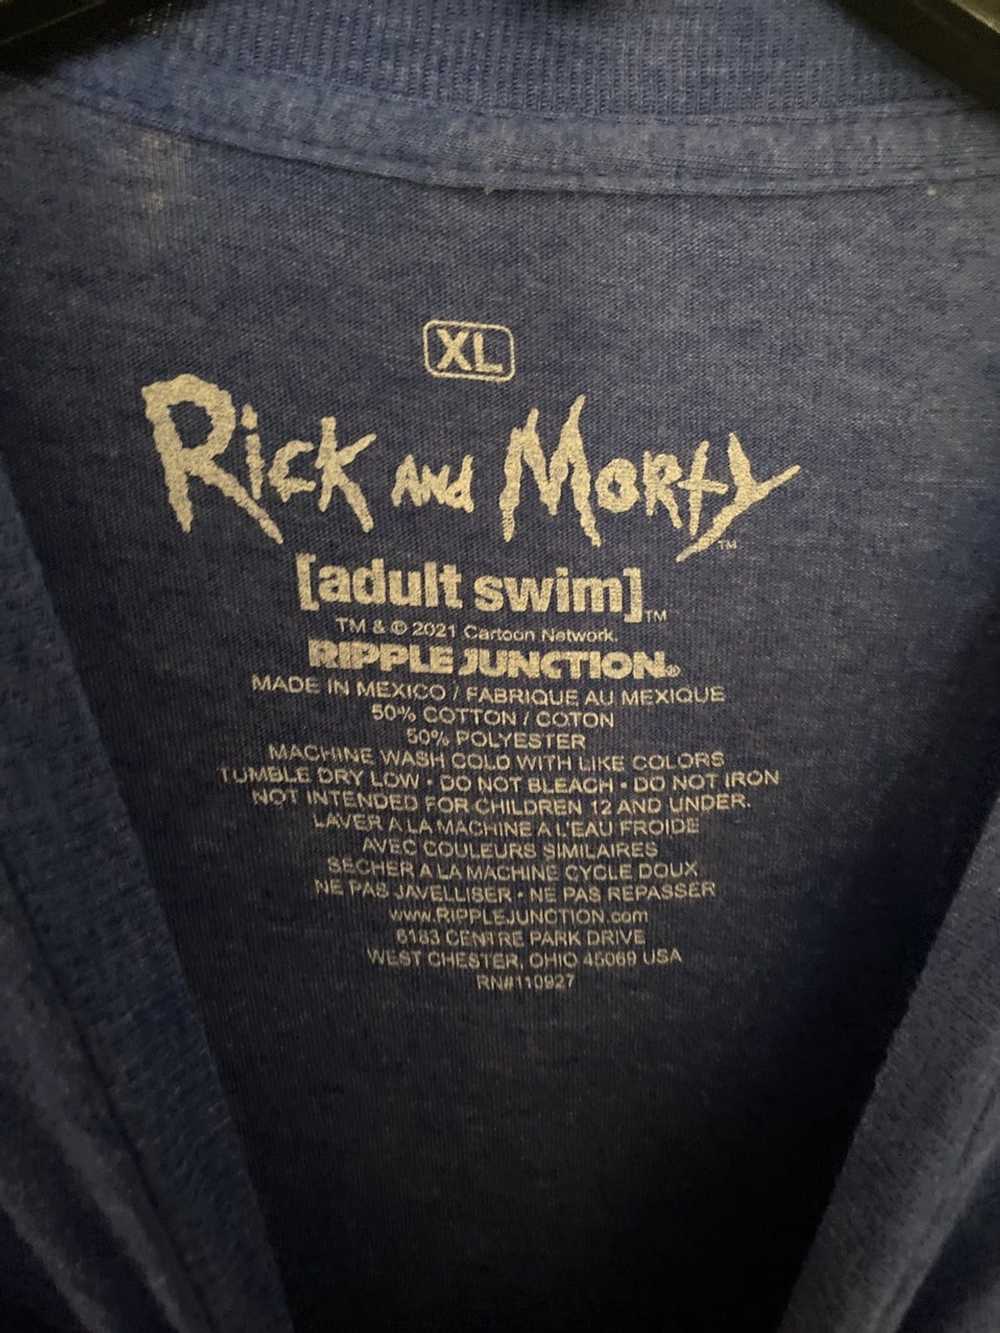 Vintage Rick and Morty Adult Swim t shirt - image 2